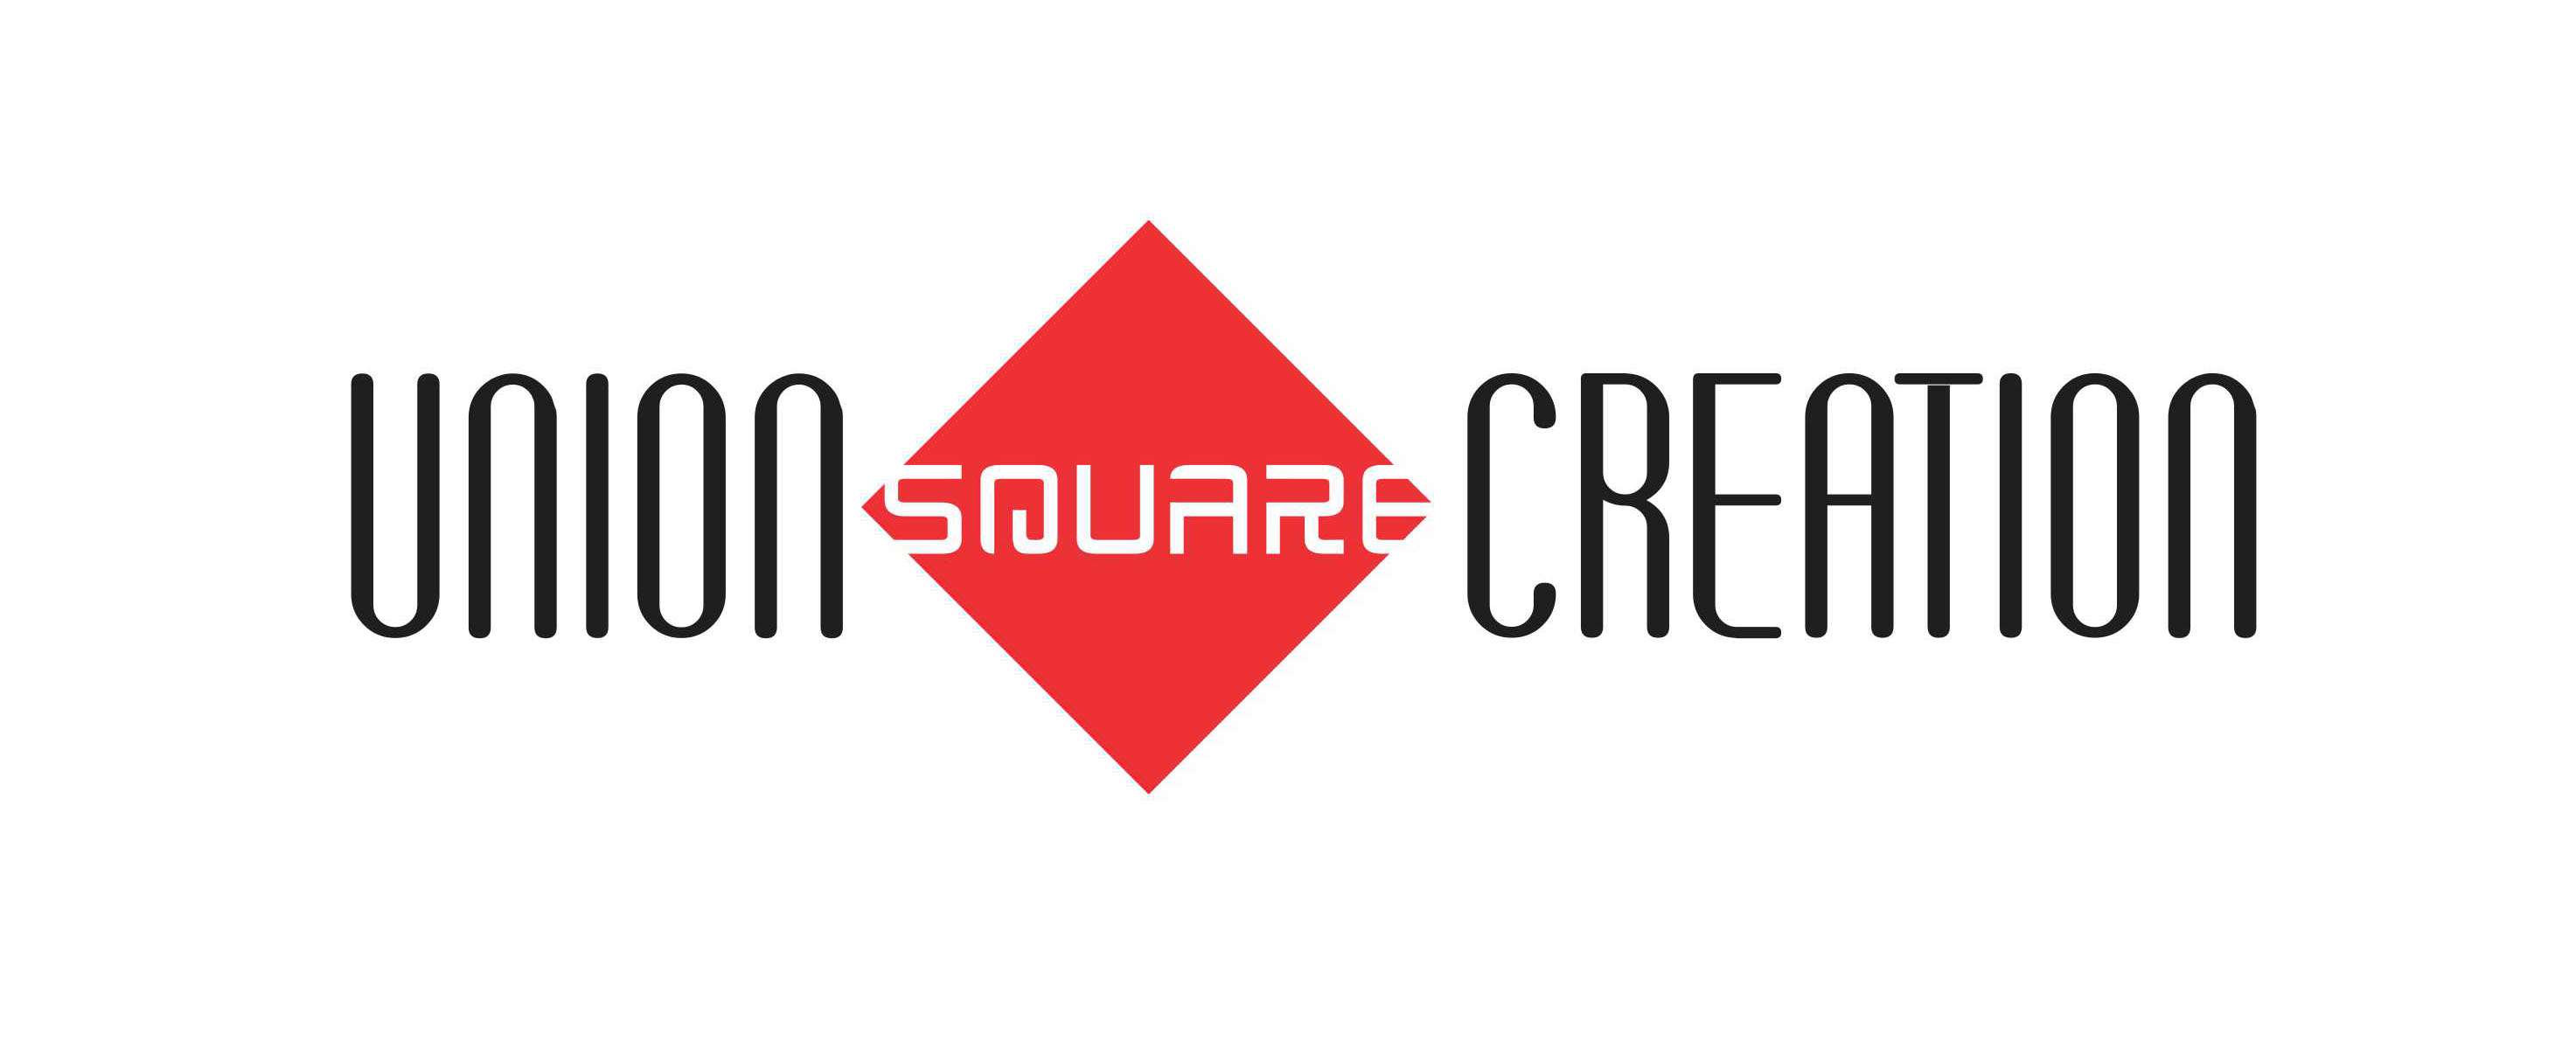 Union Square Creation